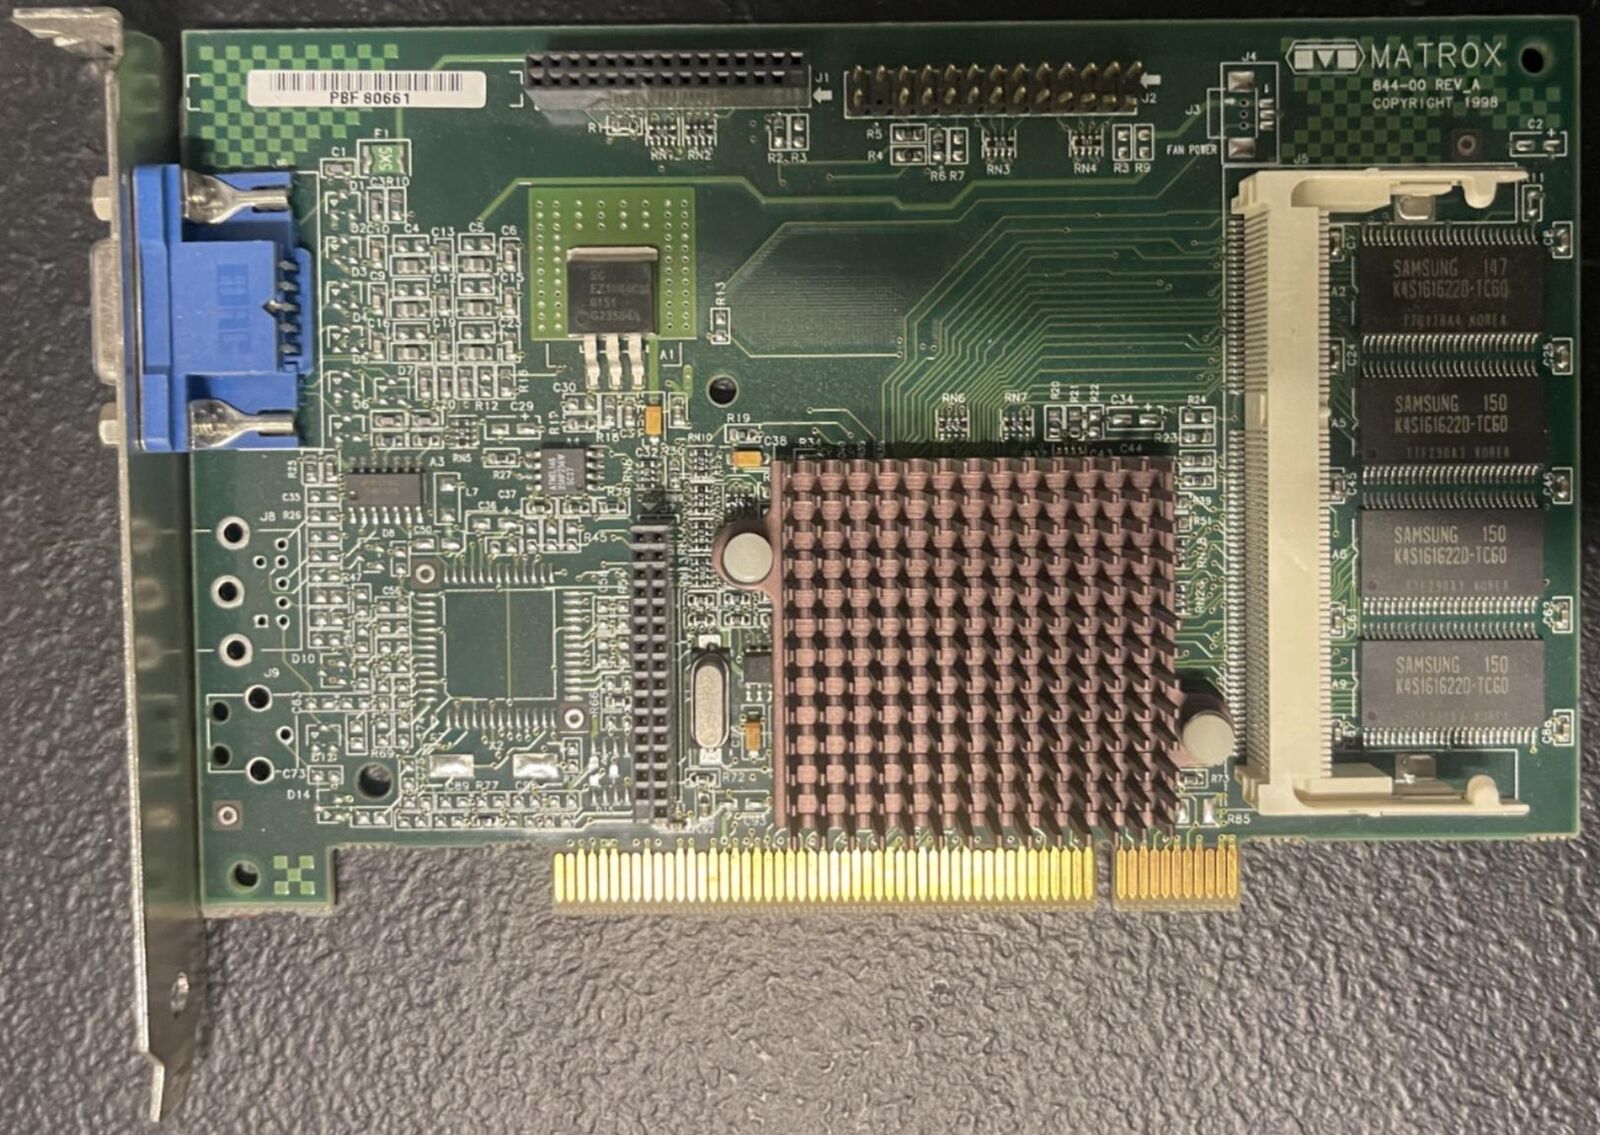 Matrox 844-00 Rev. A MGI G2+/MILP/8D/IBM PCI Video Graphic Card